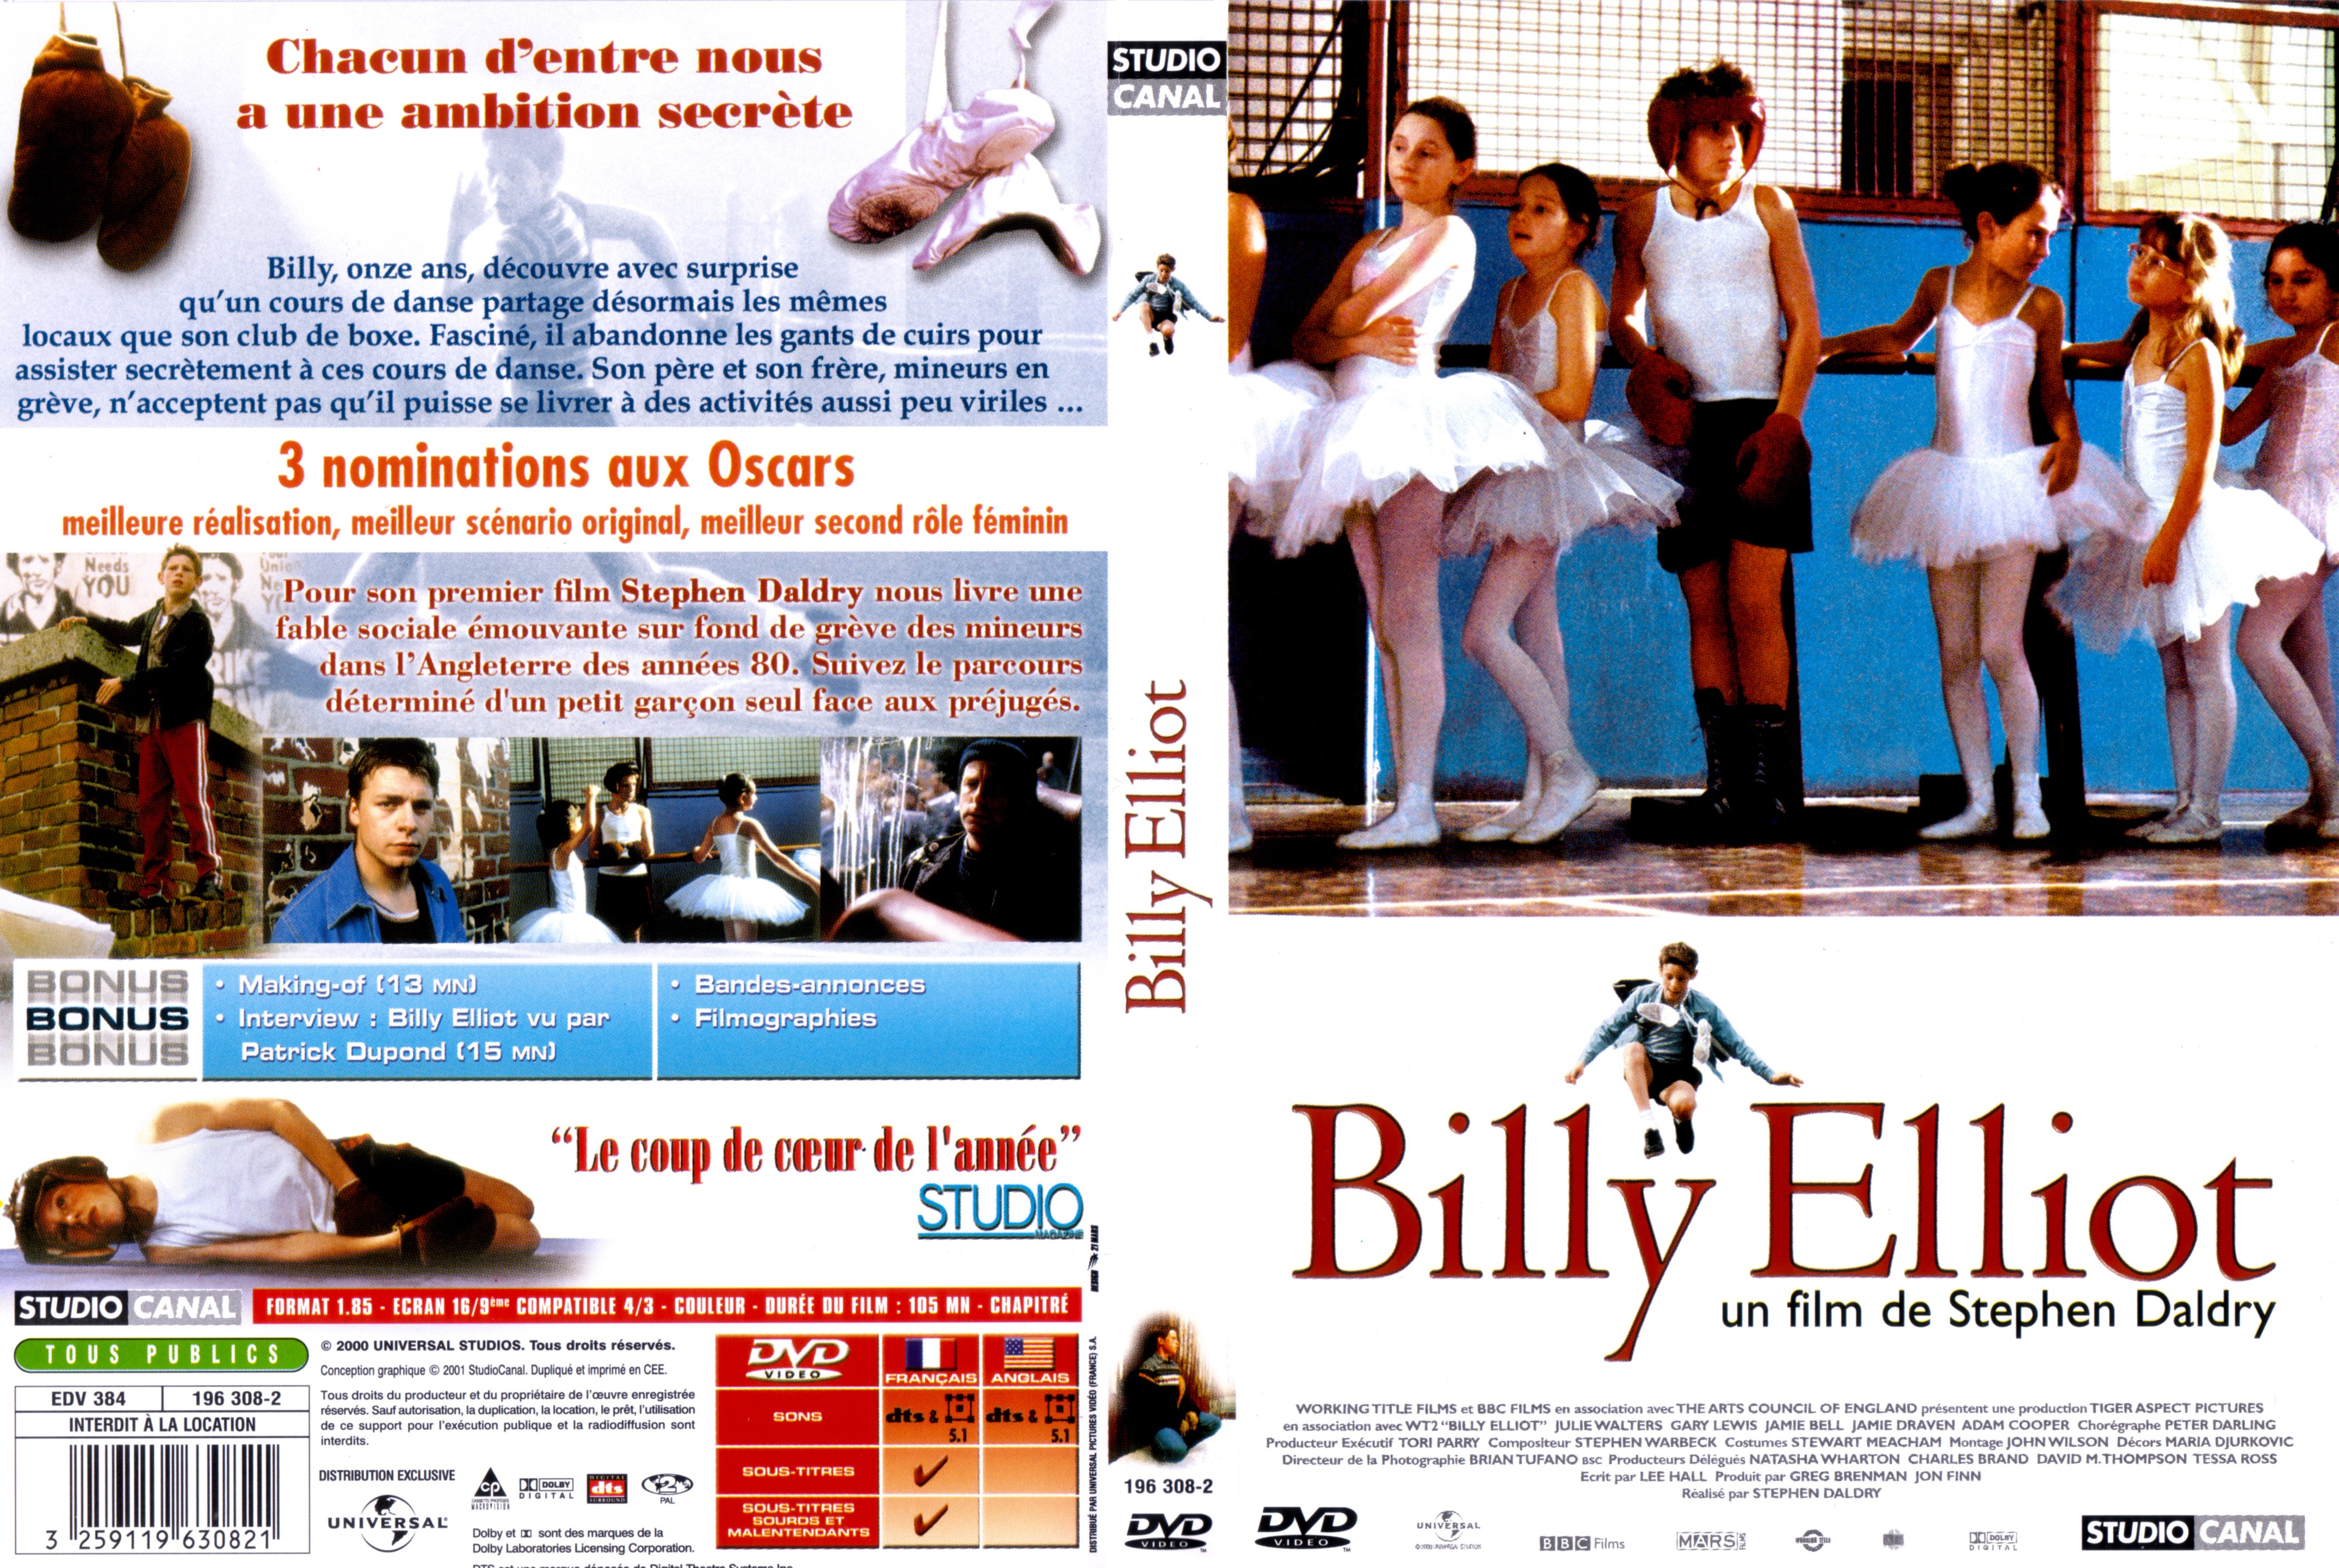 Jaquette DVD Billy Elliot